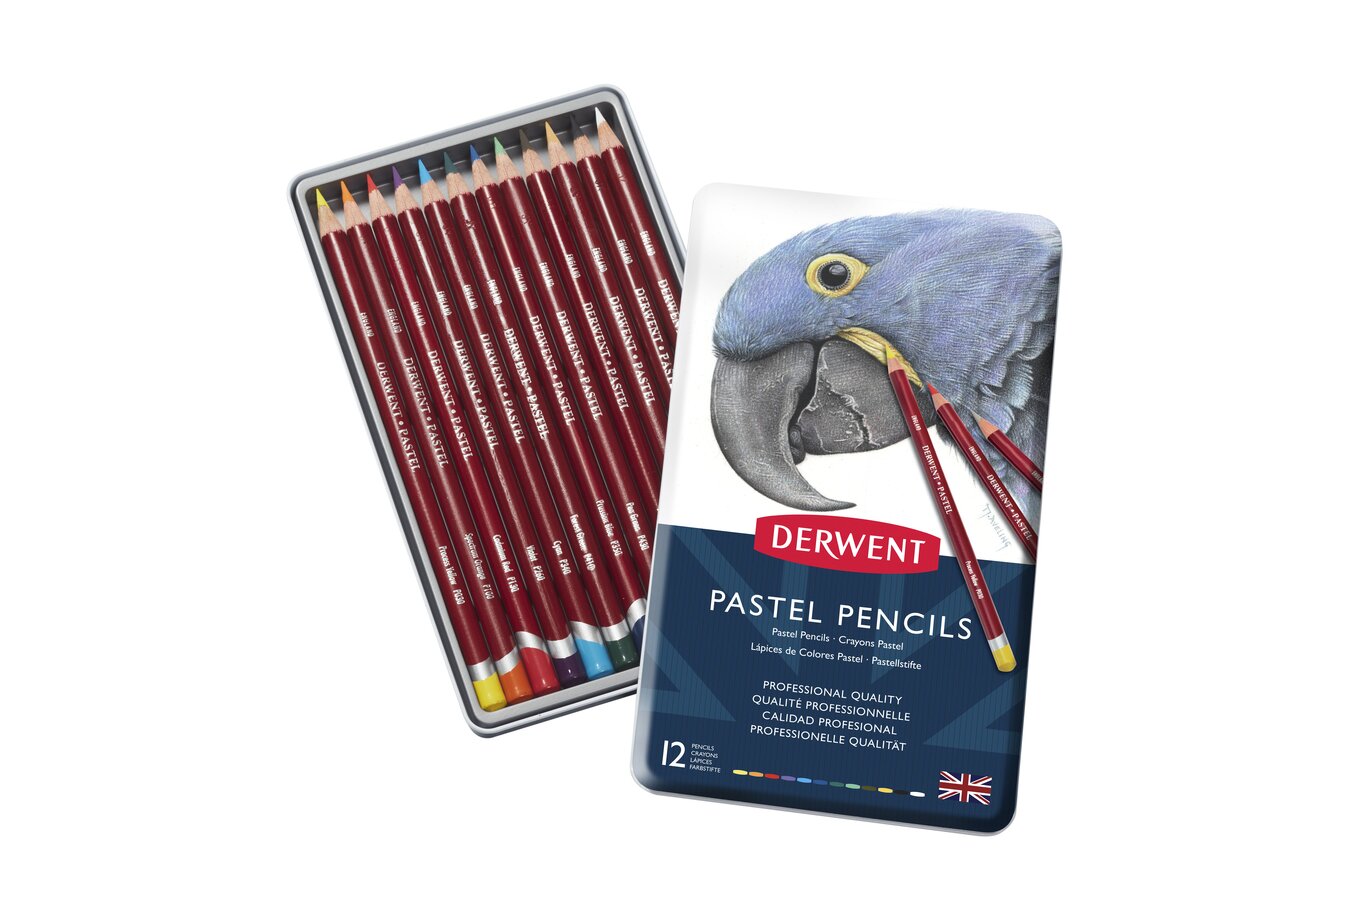 Derwent Pastel pencils – Foto Shop. Gallery